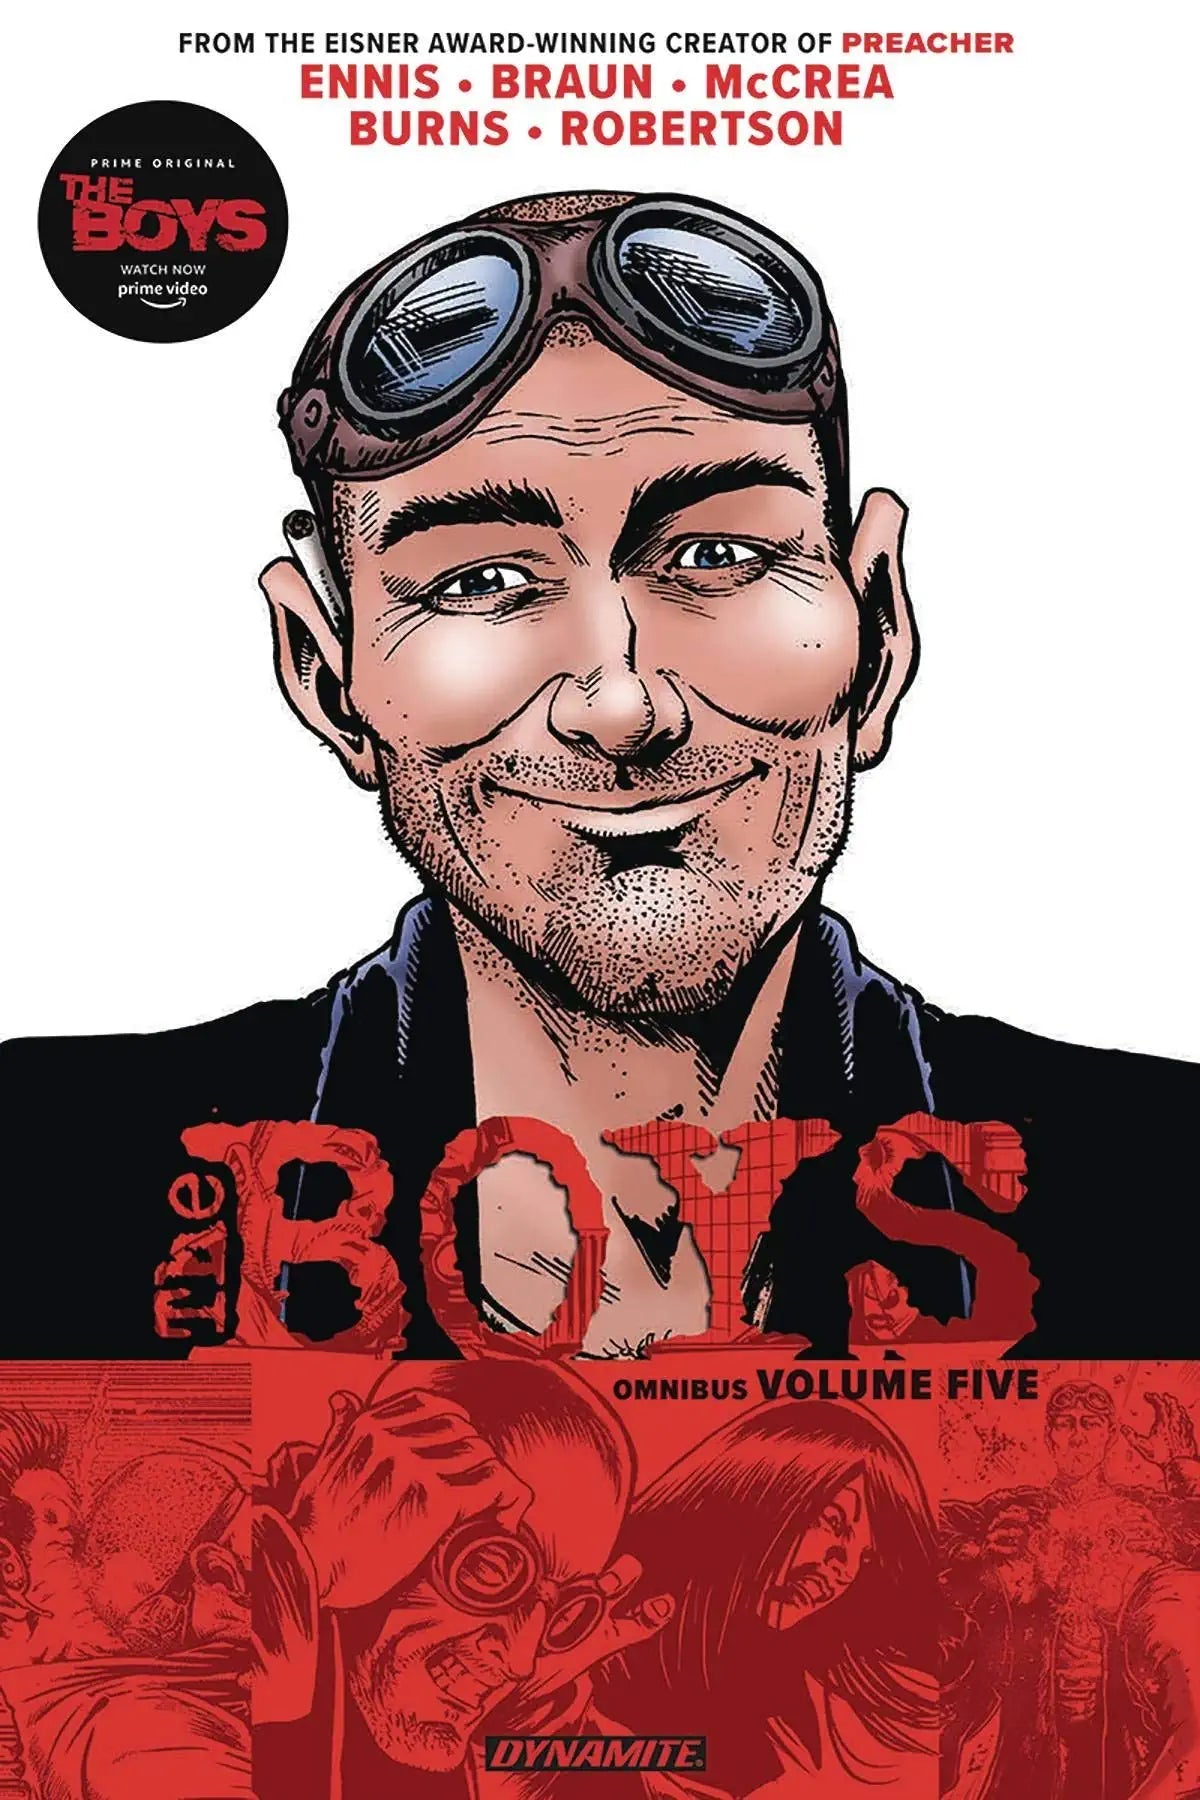 The Boys Omnibus Vol. 5 by Garth Ennis, (Artist) Darick Robertson [Paperback] - LV'S Global Media